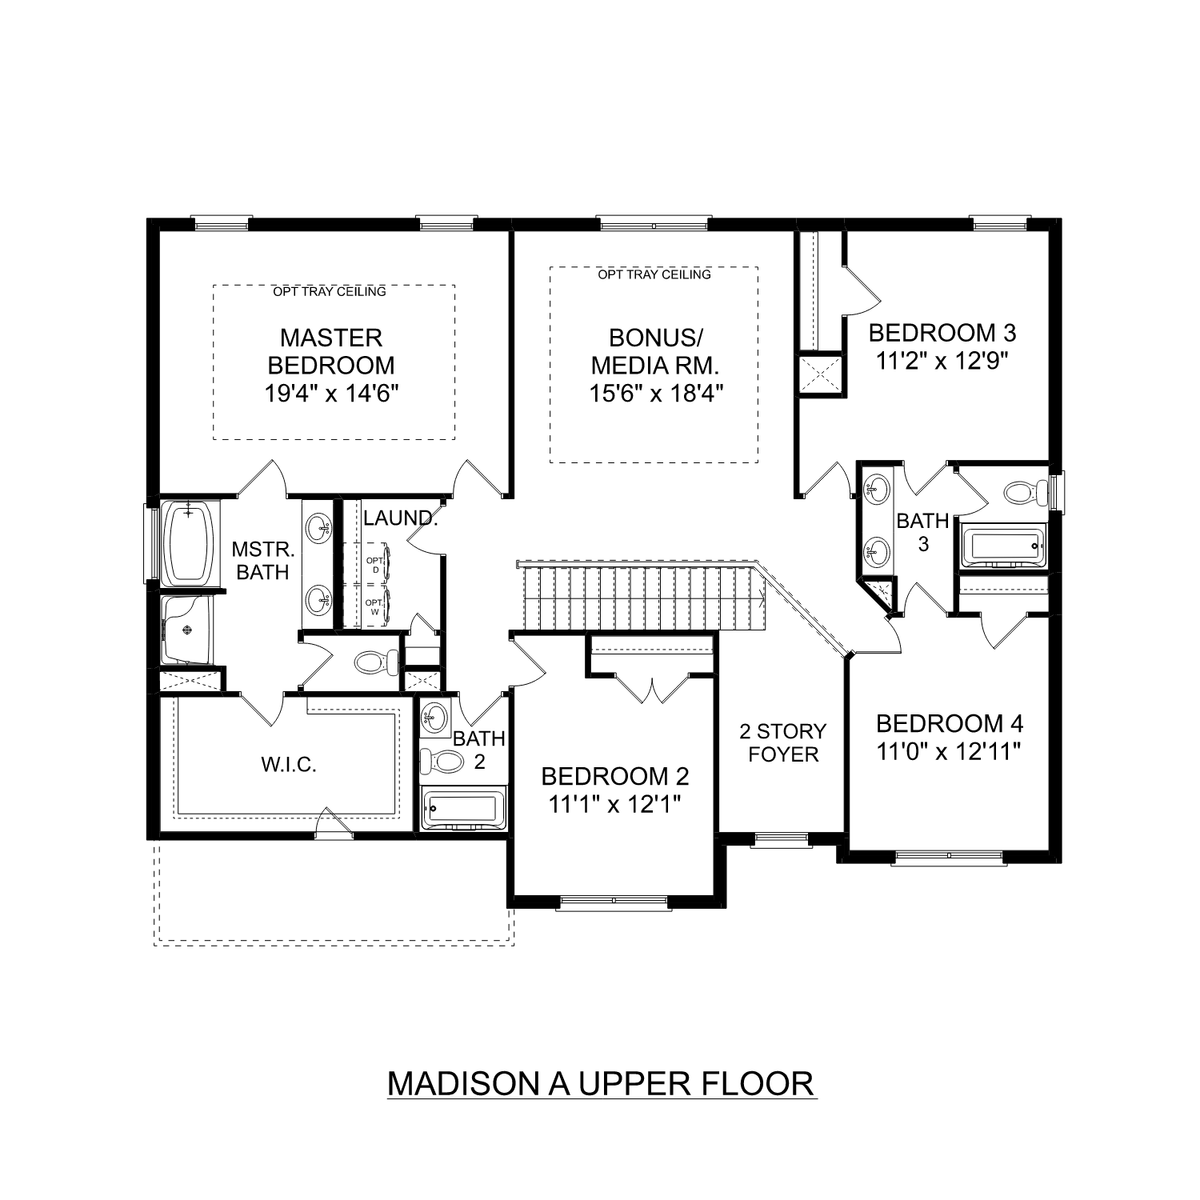 2 - The Madison A floor plan layout for 2120 Brandon Drive NE in Davidson Homes' North Ridge community.